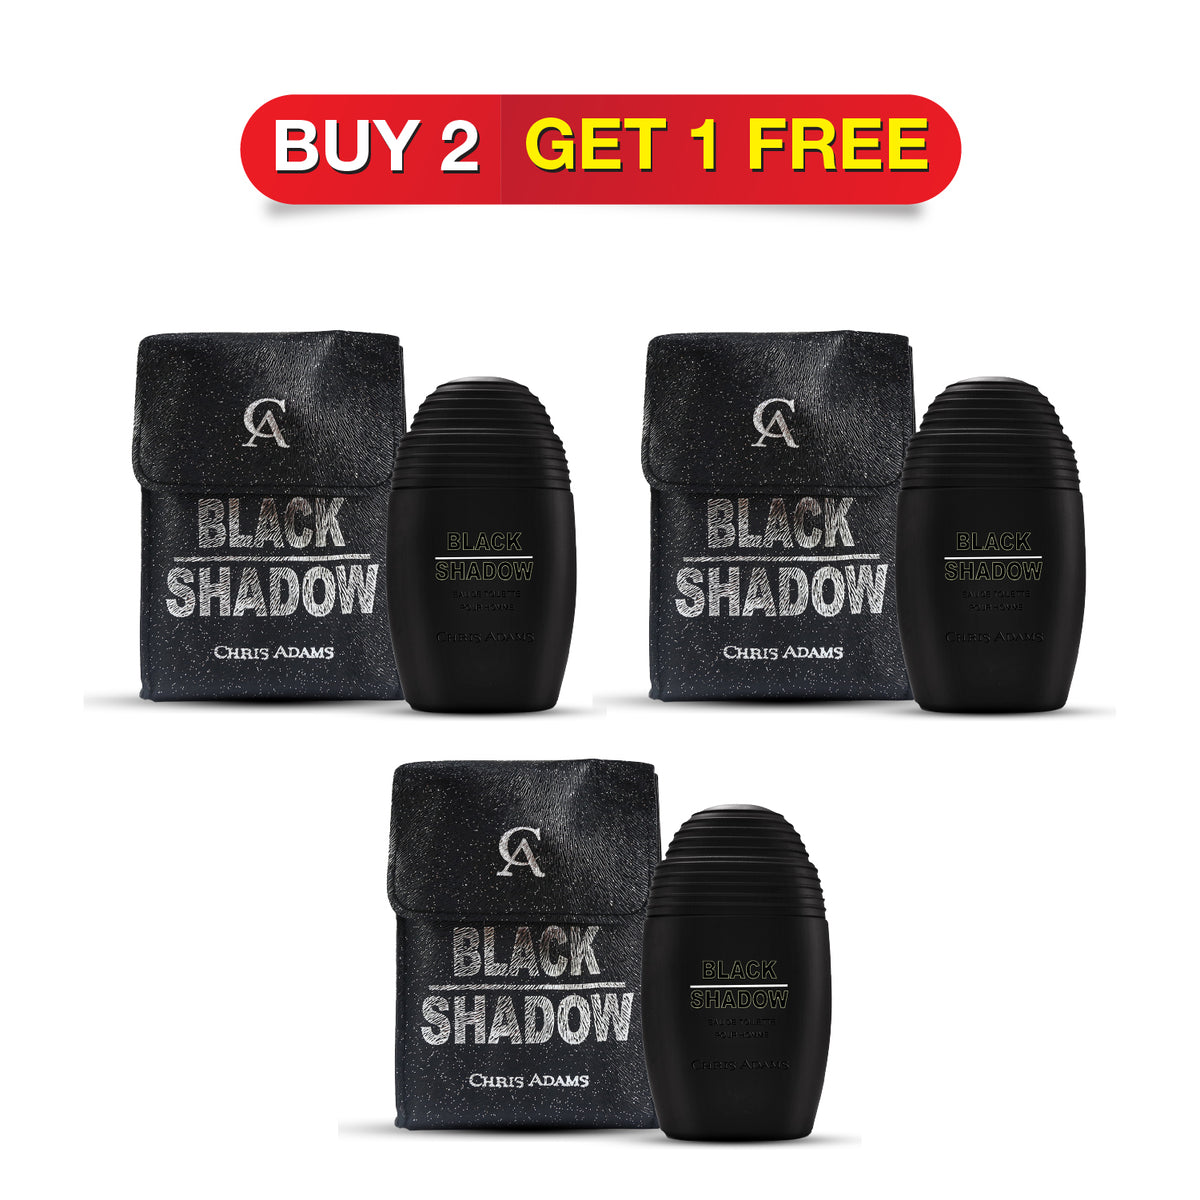 Chris Adams Eau De Toilette - Black Shadow, 100ml | Buy 2 Get 1 Free